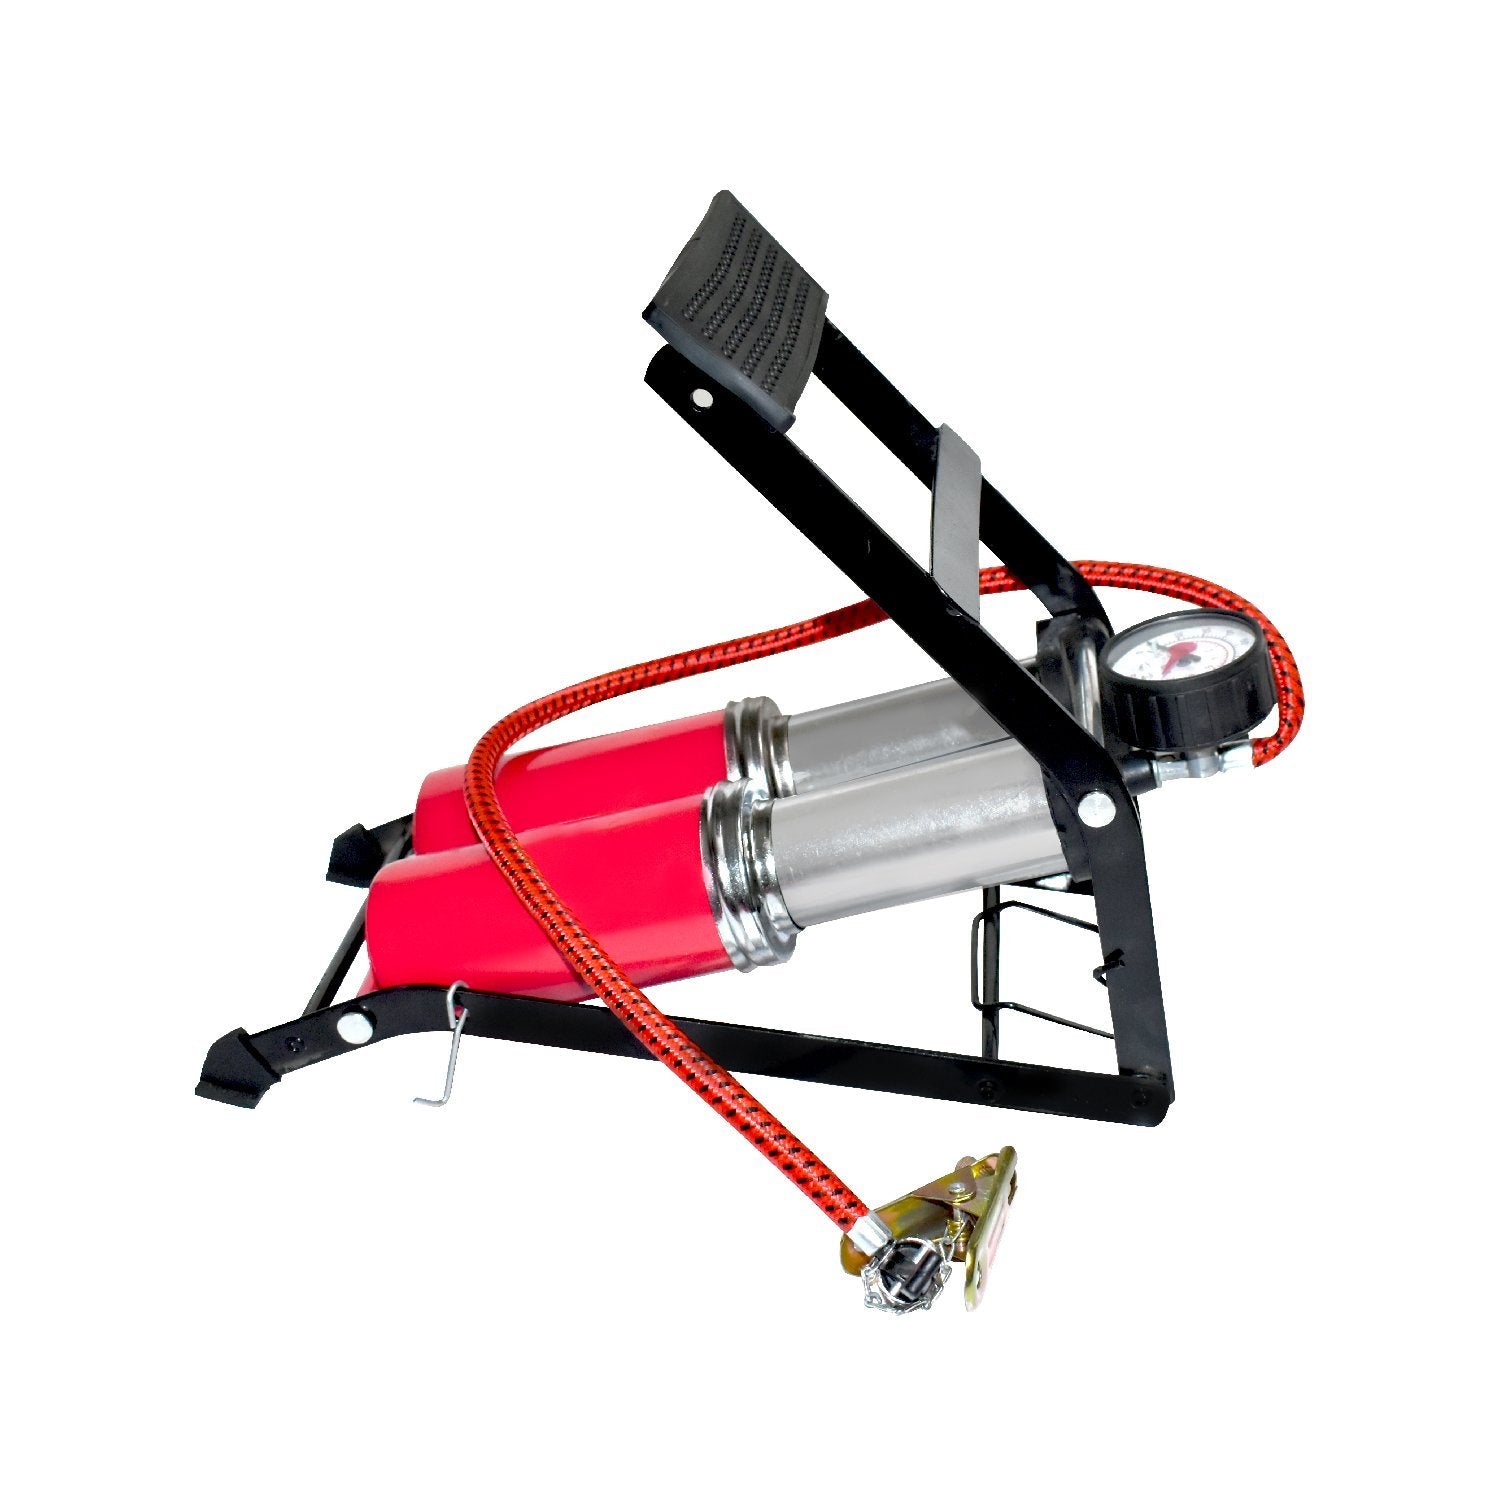 0709 Dual-Cylinder Foot Pump, Portable Floor Bike Pump, 150PSI Air Pump - SkyShopy